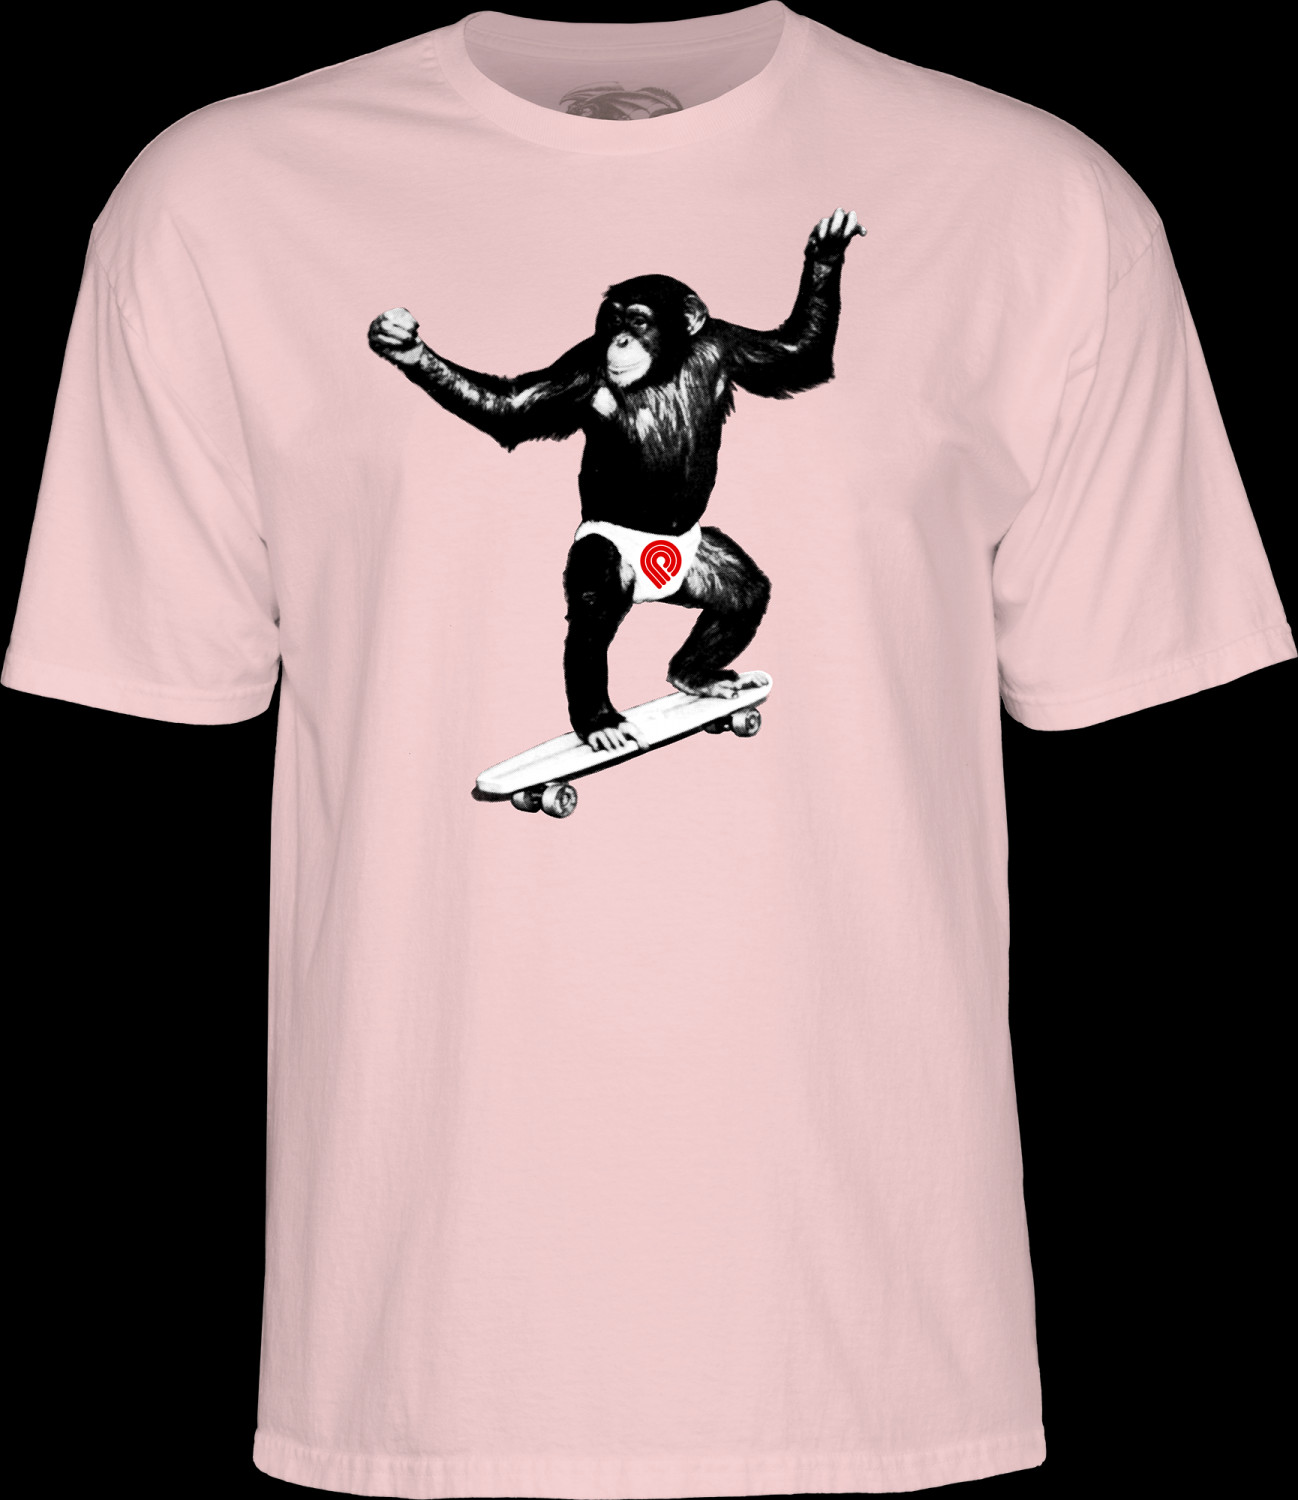 Powell Peralta Skate Chimp T-Shirt Light Pink Photo #1 - Photo Gallery ...